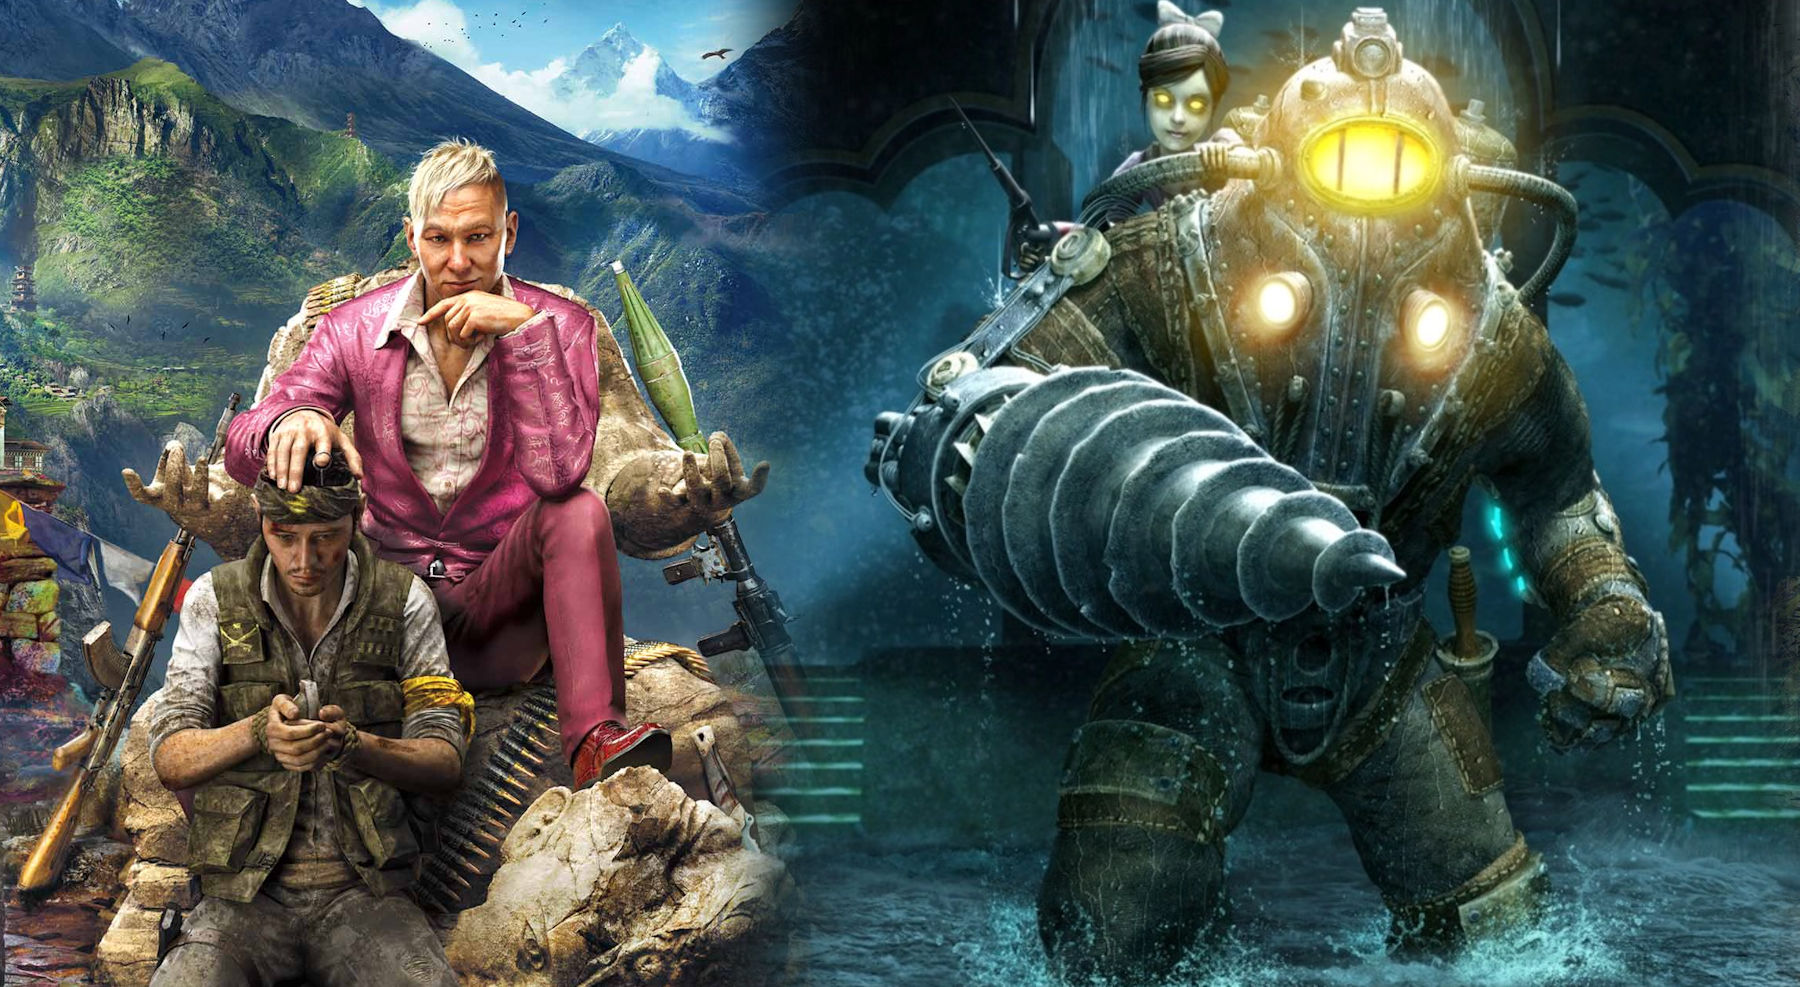 BioShock Remastered PS4 videos - Gamersyde